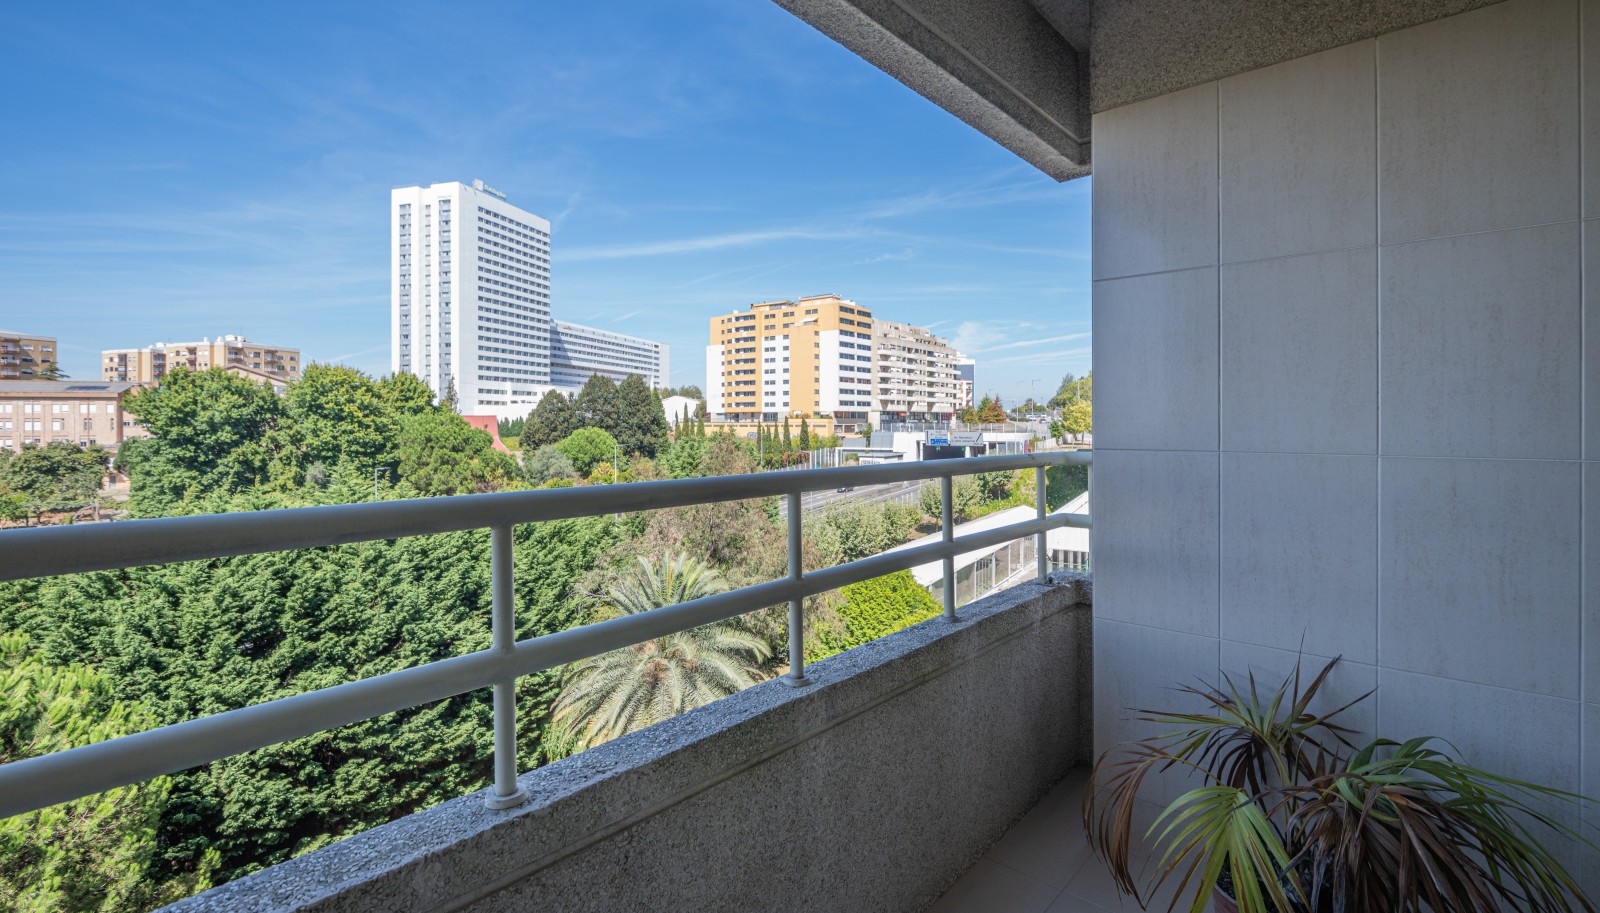 Appartement de 5 chambres avec balcon, à vendre, à V. N. Gaia, Porto, Portugal_236349